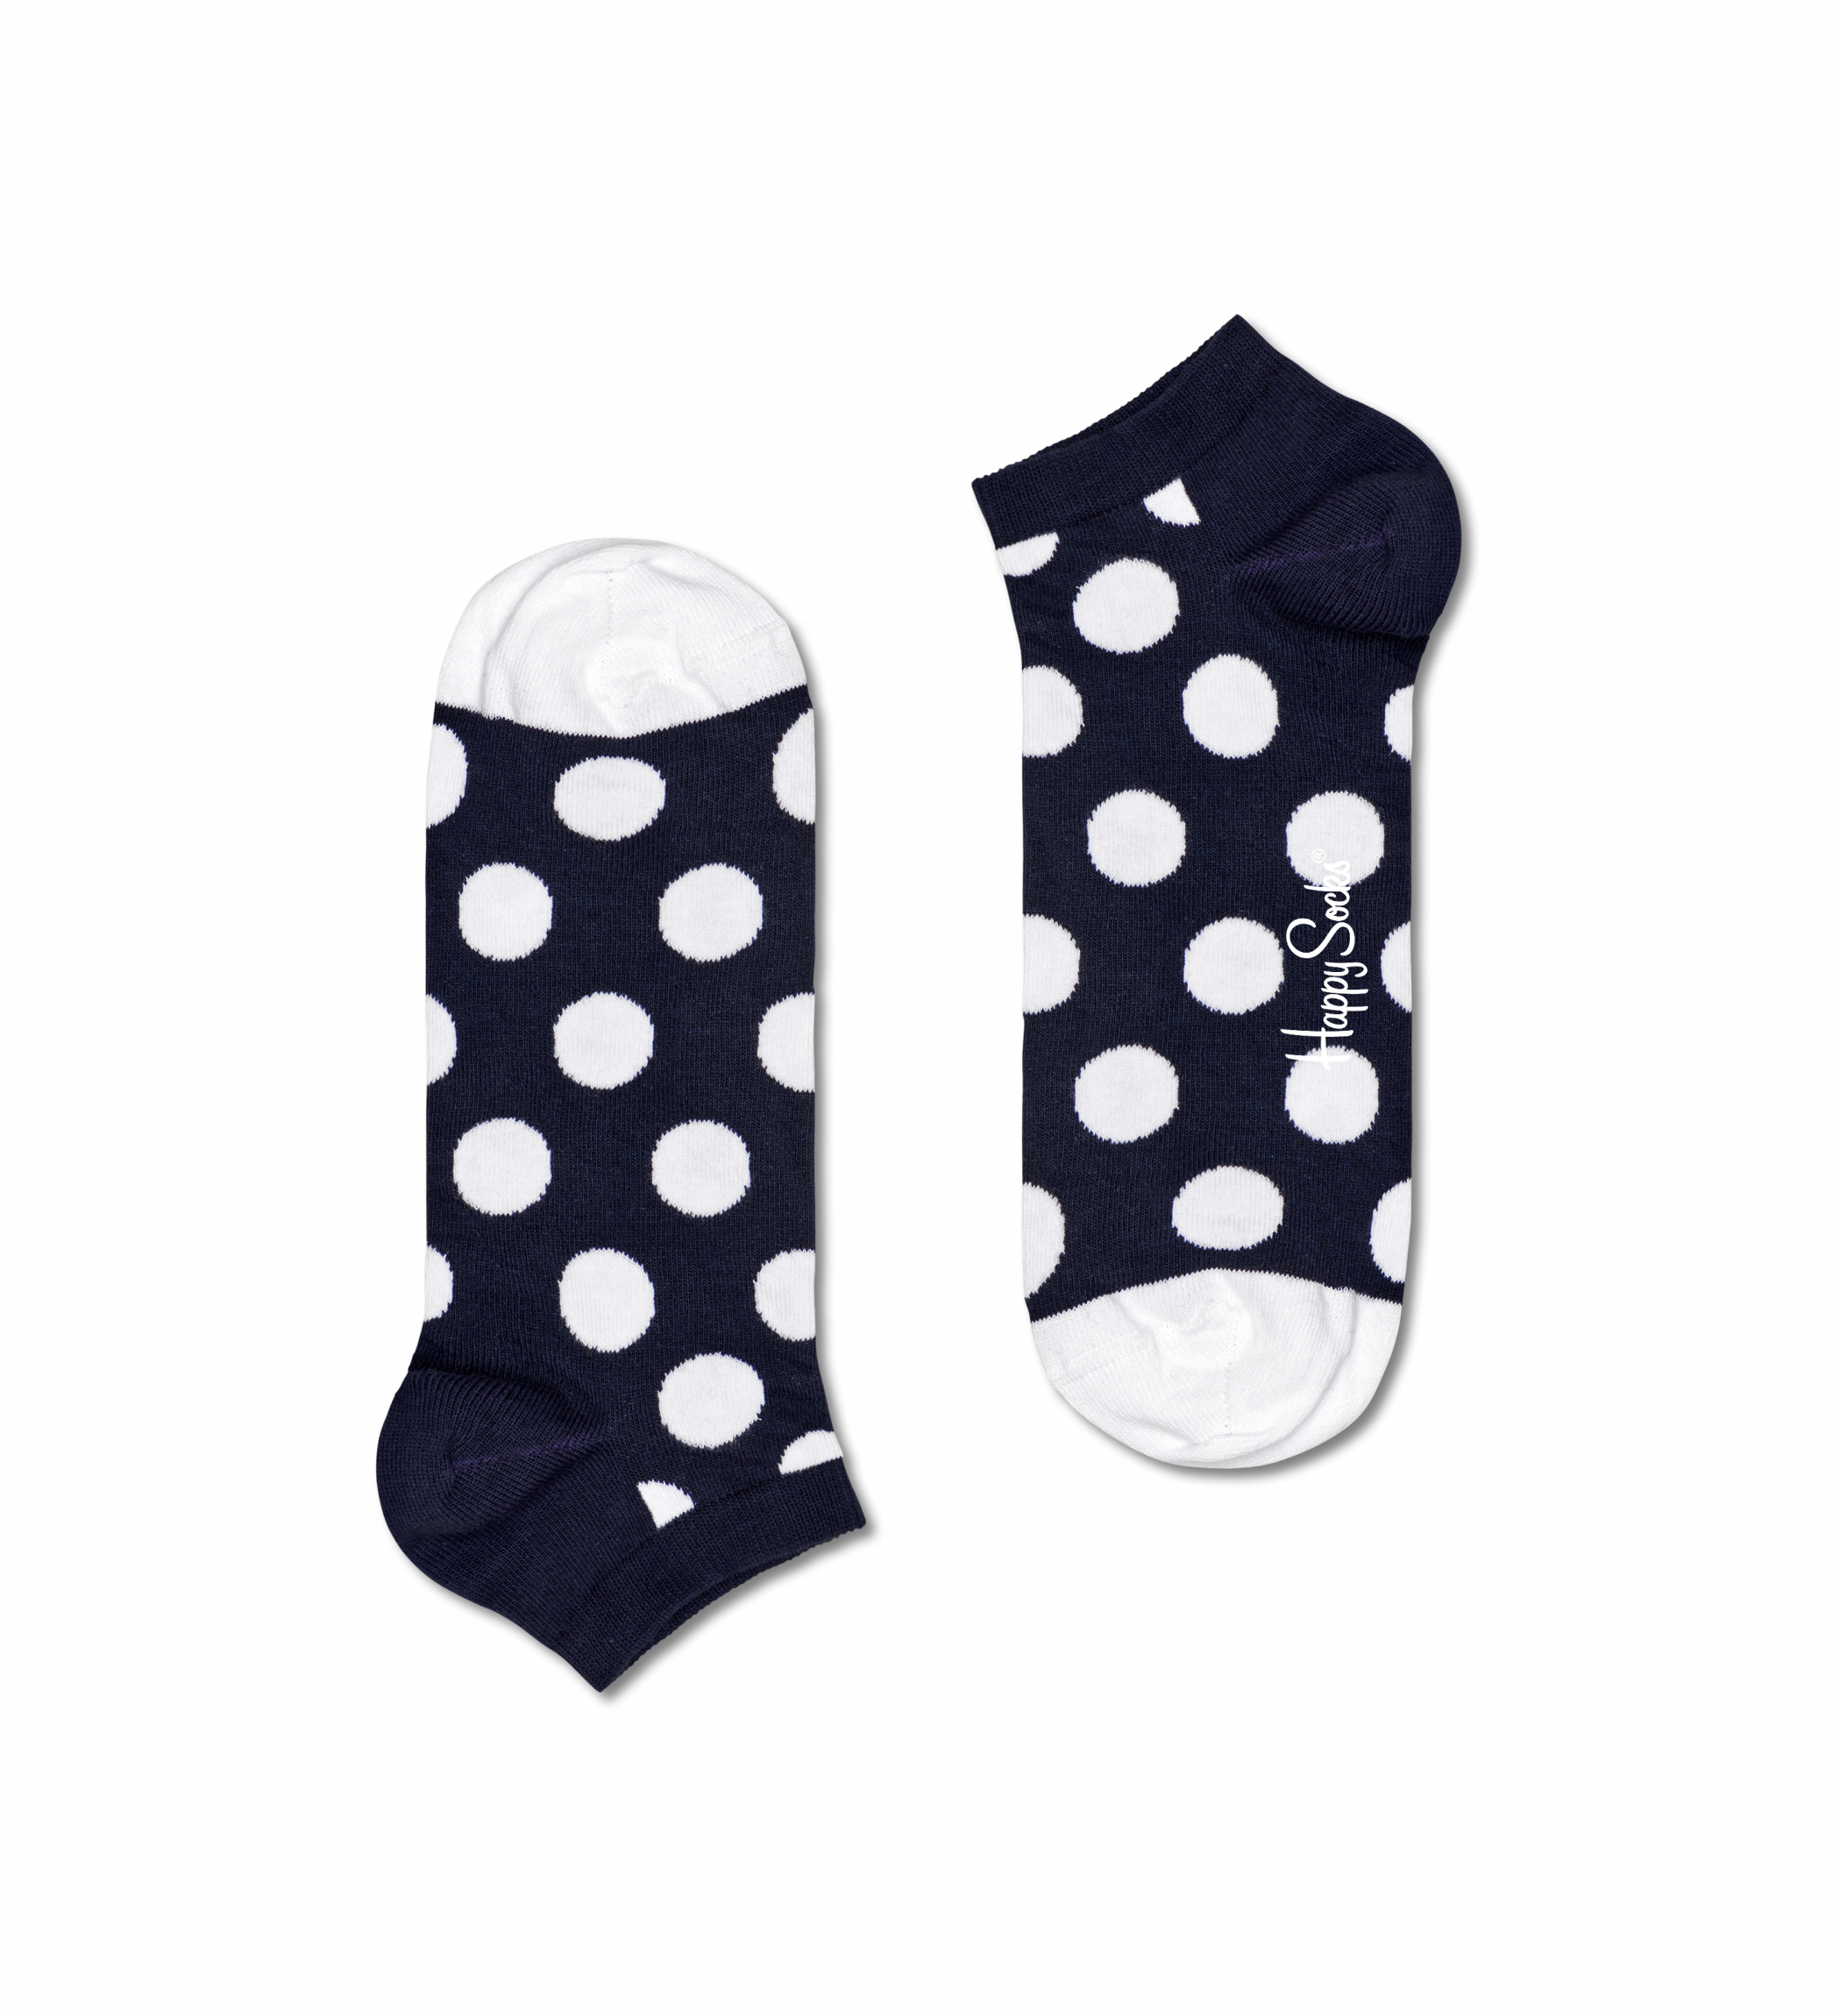 Modré nízke ponožky Happy Socks s bodkami, vzor Big Dot